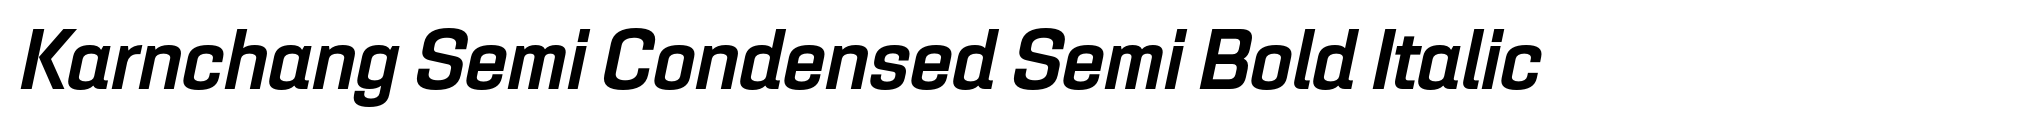 Karnchang Semi Condensed Semi Bold Italic image